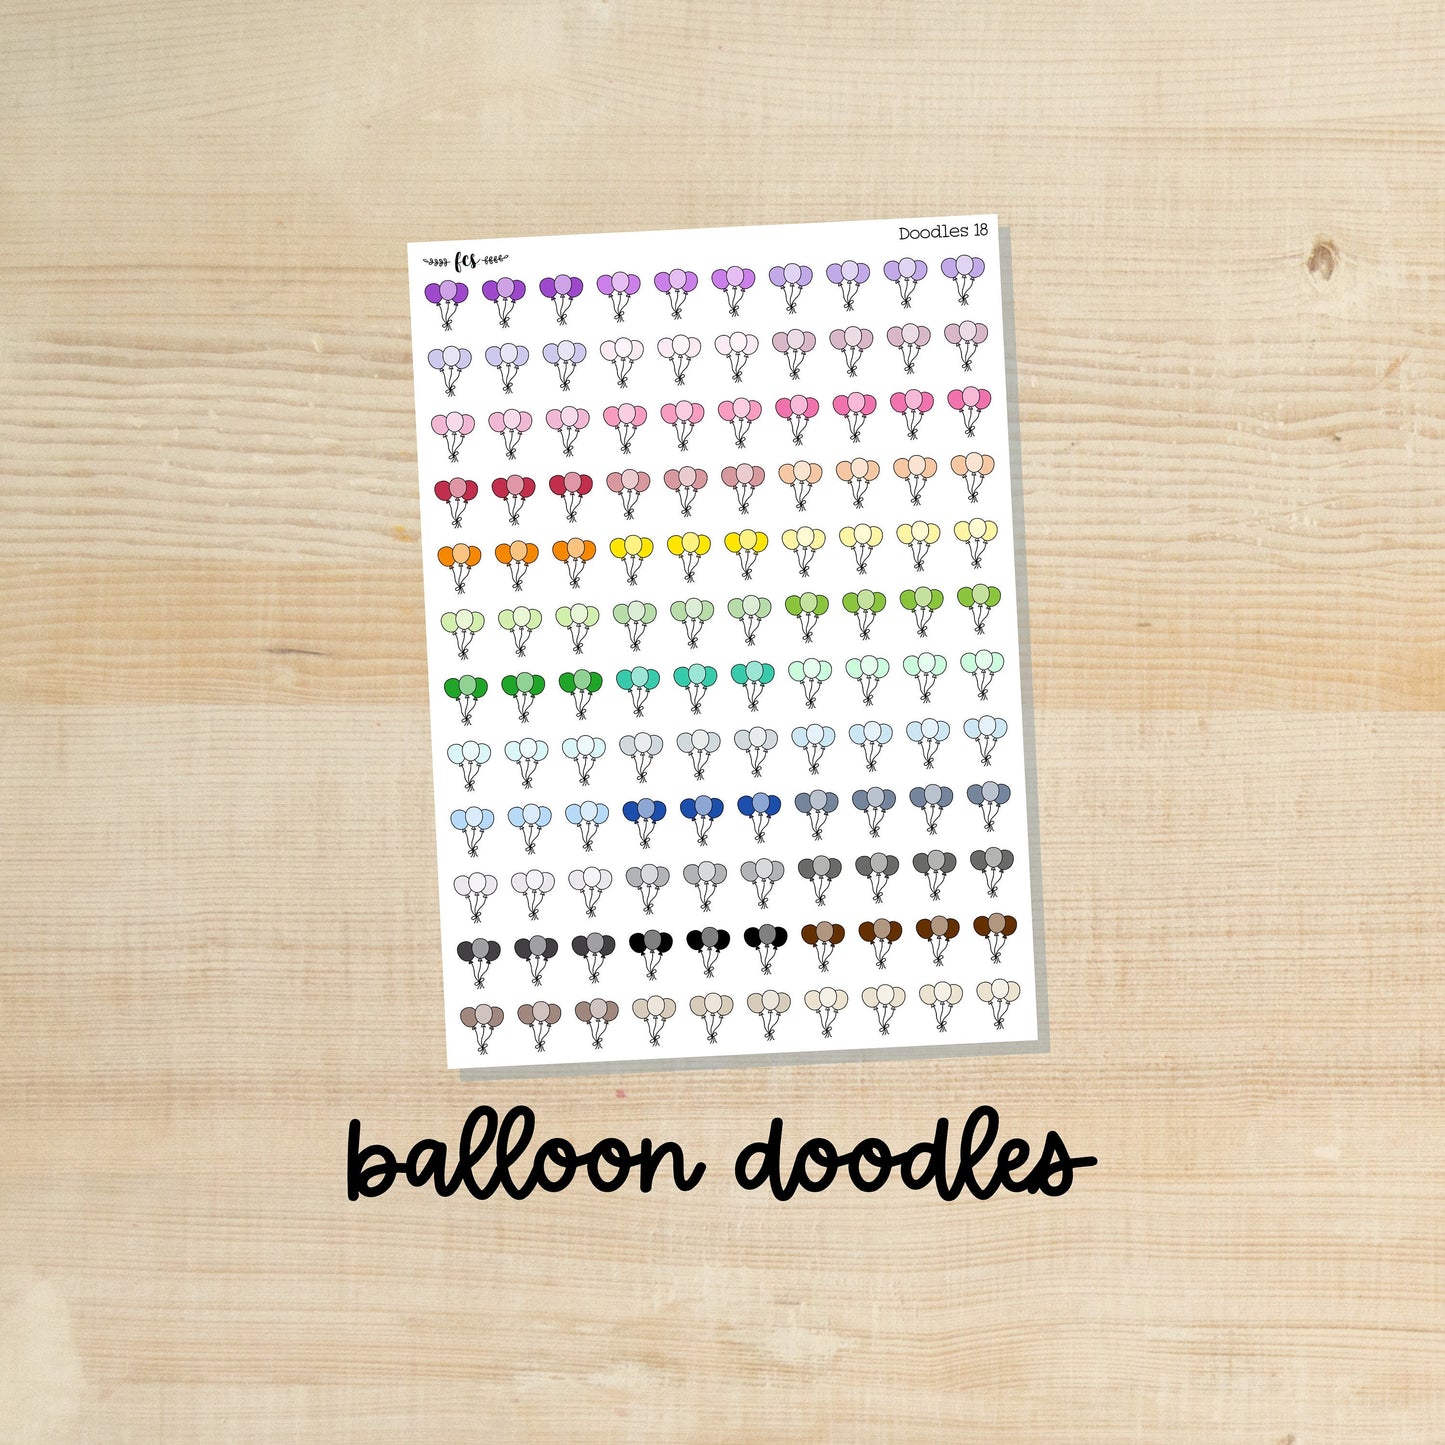 DOODLES-18 || BALLOON doodle planner stickers